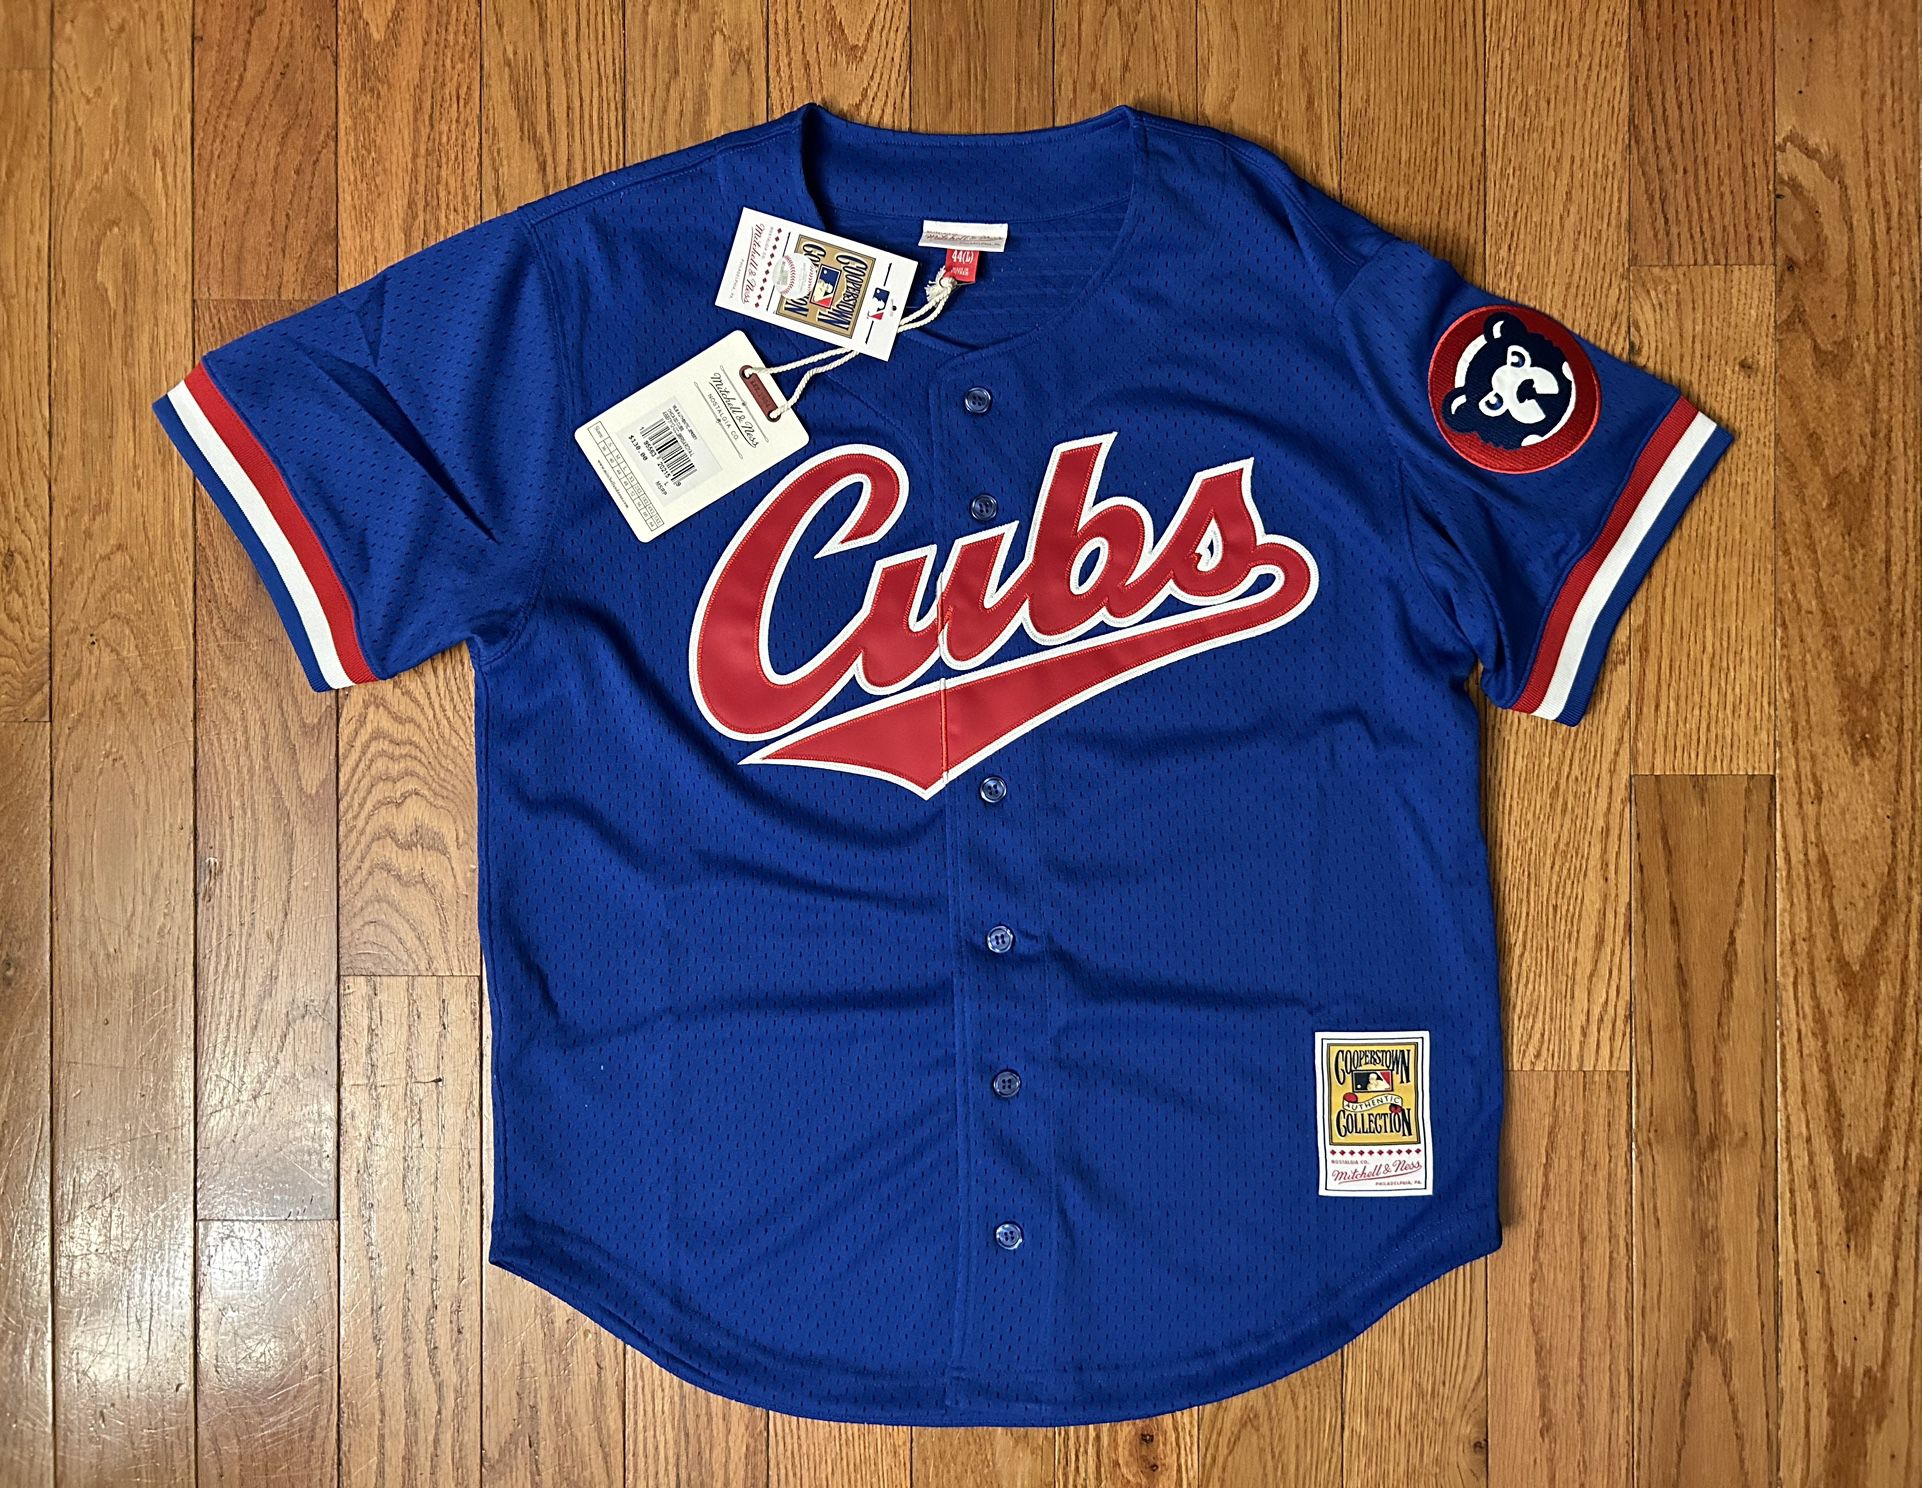 Ryne Sandberg #23 Chicago Cubs Mitchell & Ness Jersey Size 44 (Large) NEW